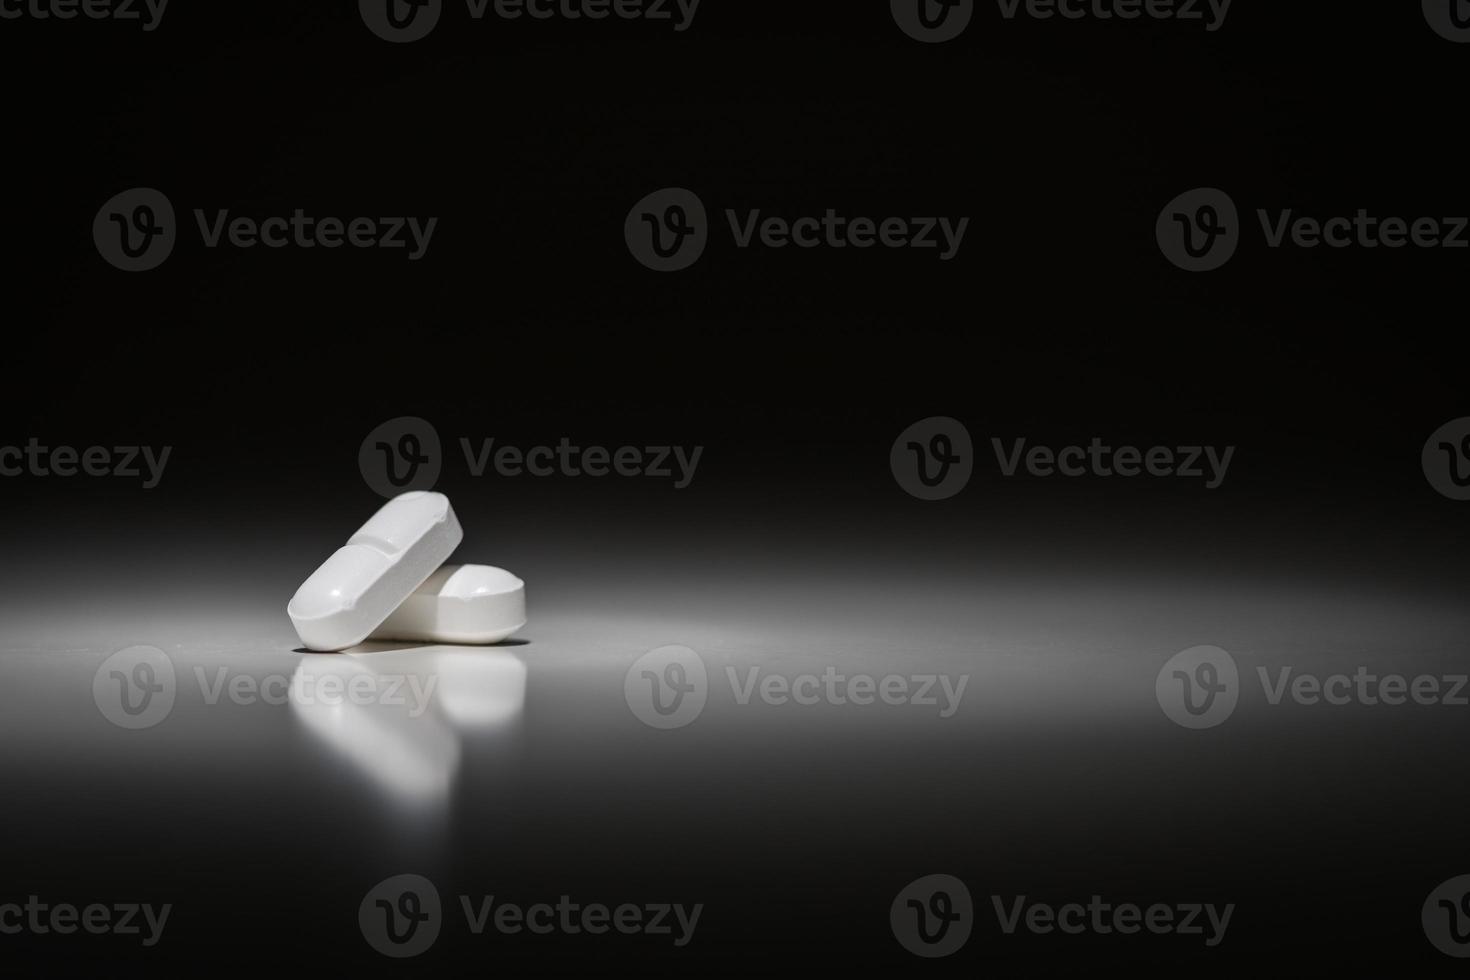 Hydrocodone Prescription Pills Under Spot Light. photo